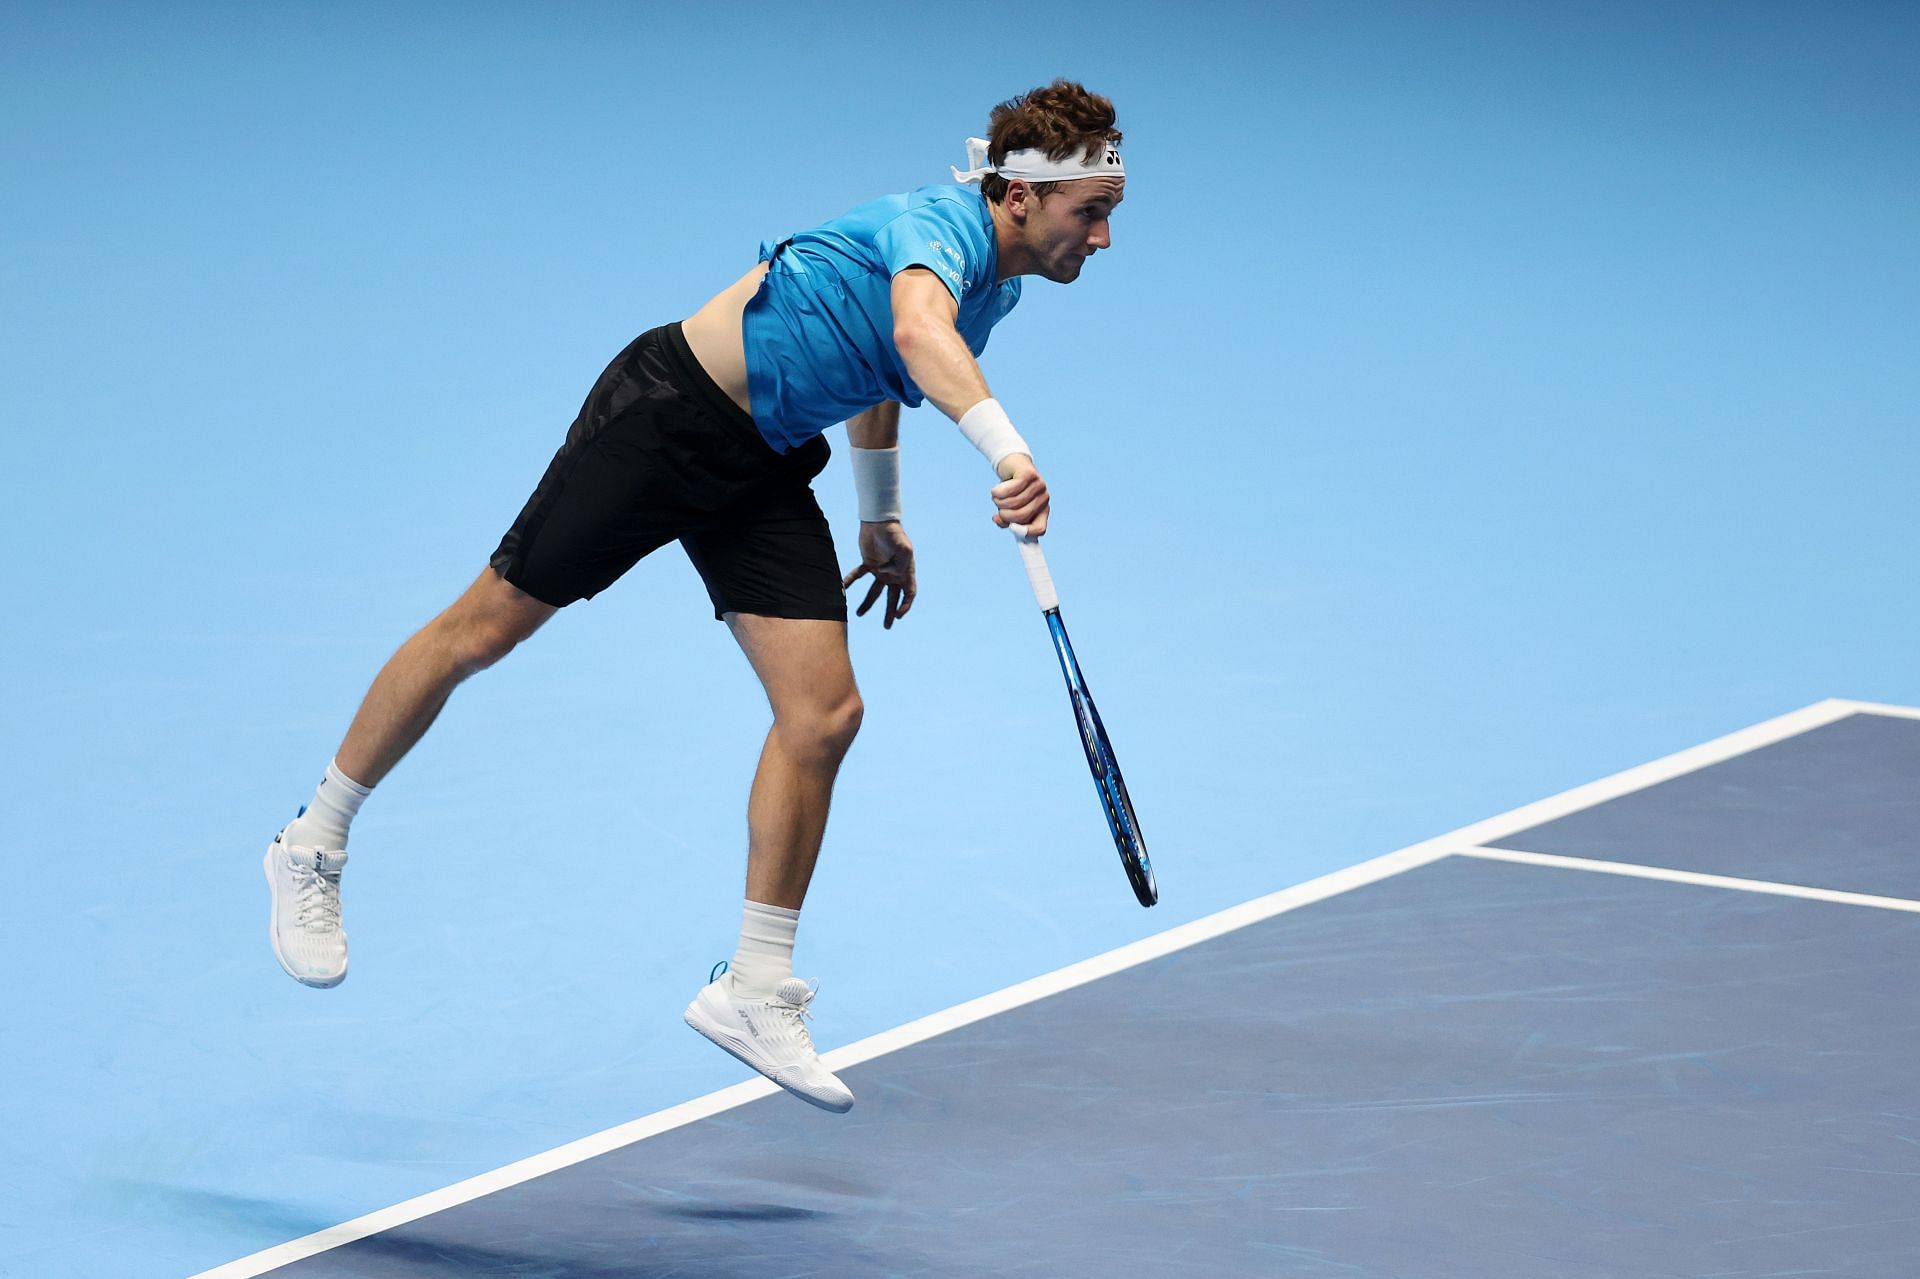 Casper Ruud serves against Novak Djokovic at the Nitto ATP World Tour Finals